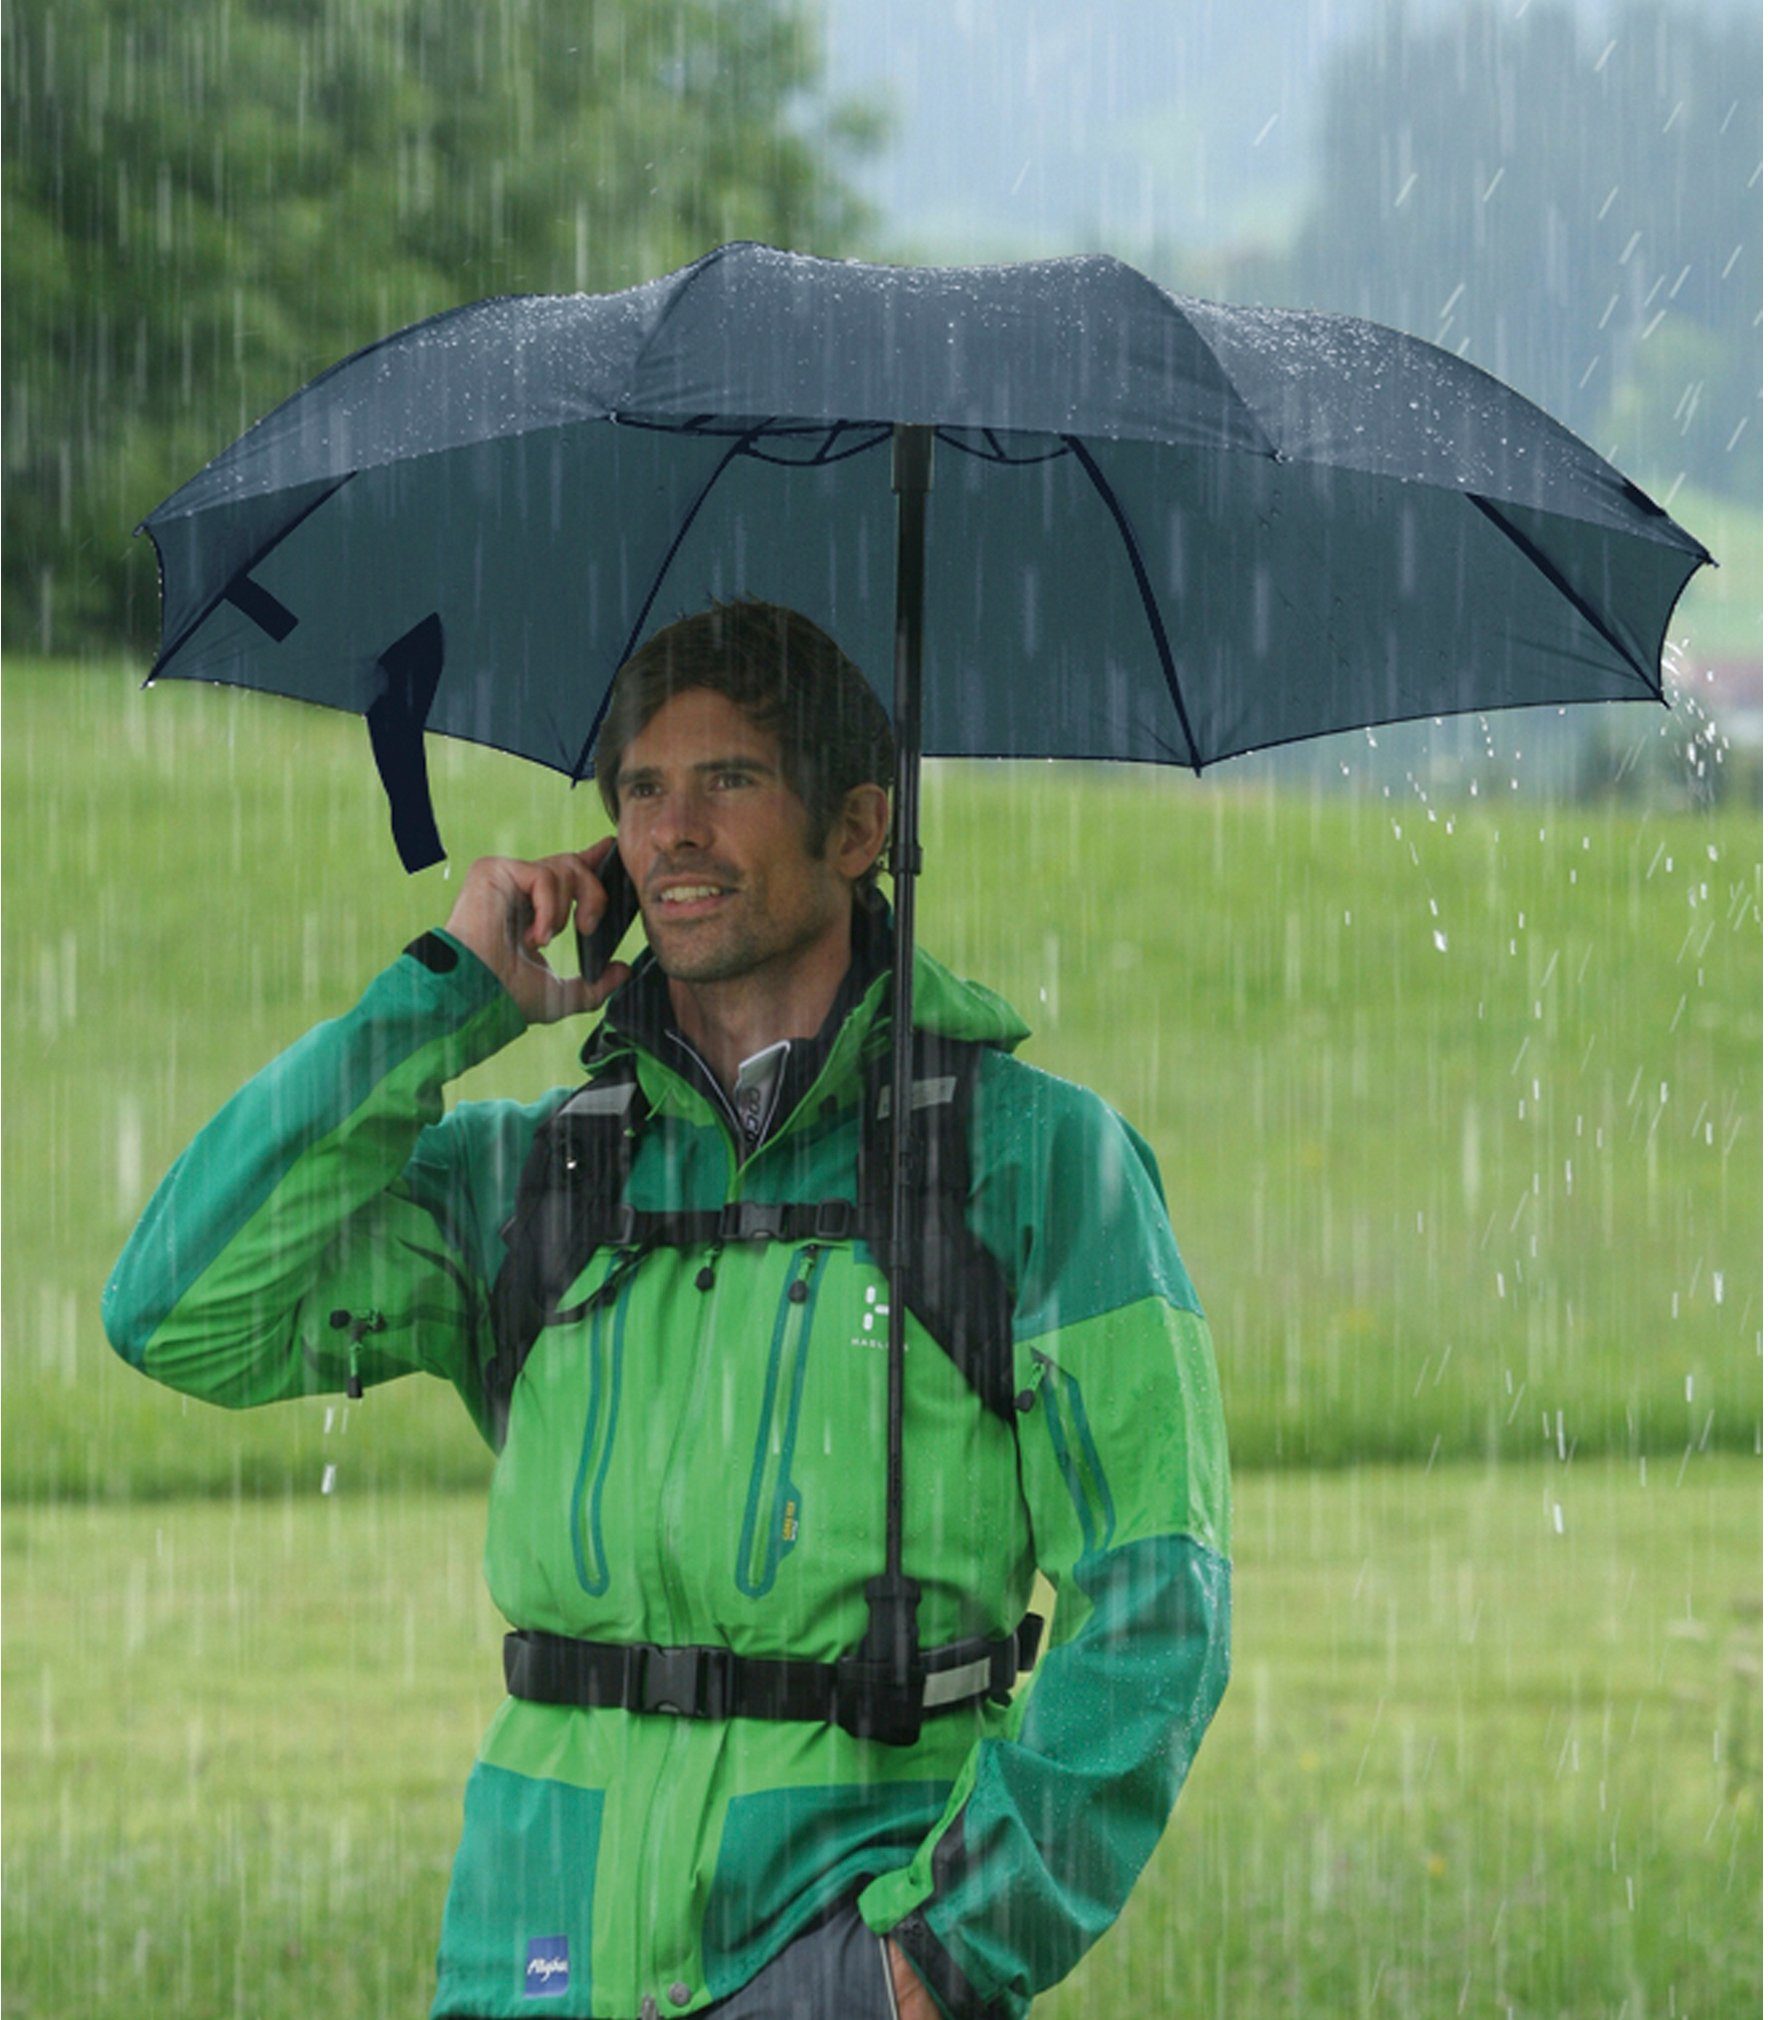 Taschenregenschirm handfrei tragbar EuroSCHIRM® marineblau, handsfree, teleScope